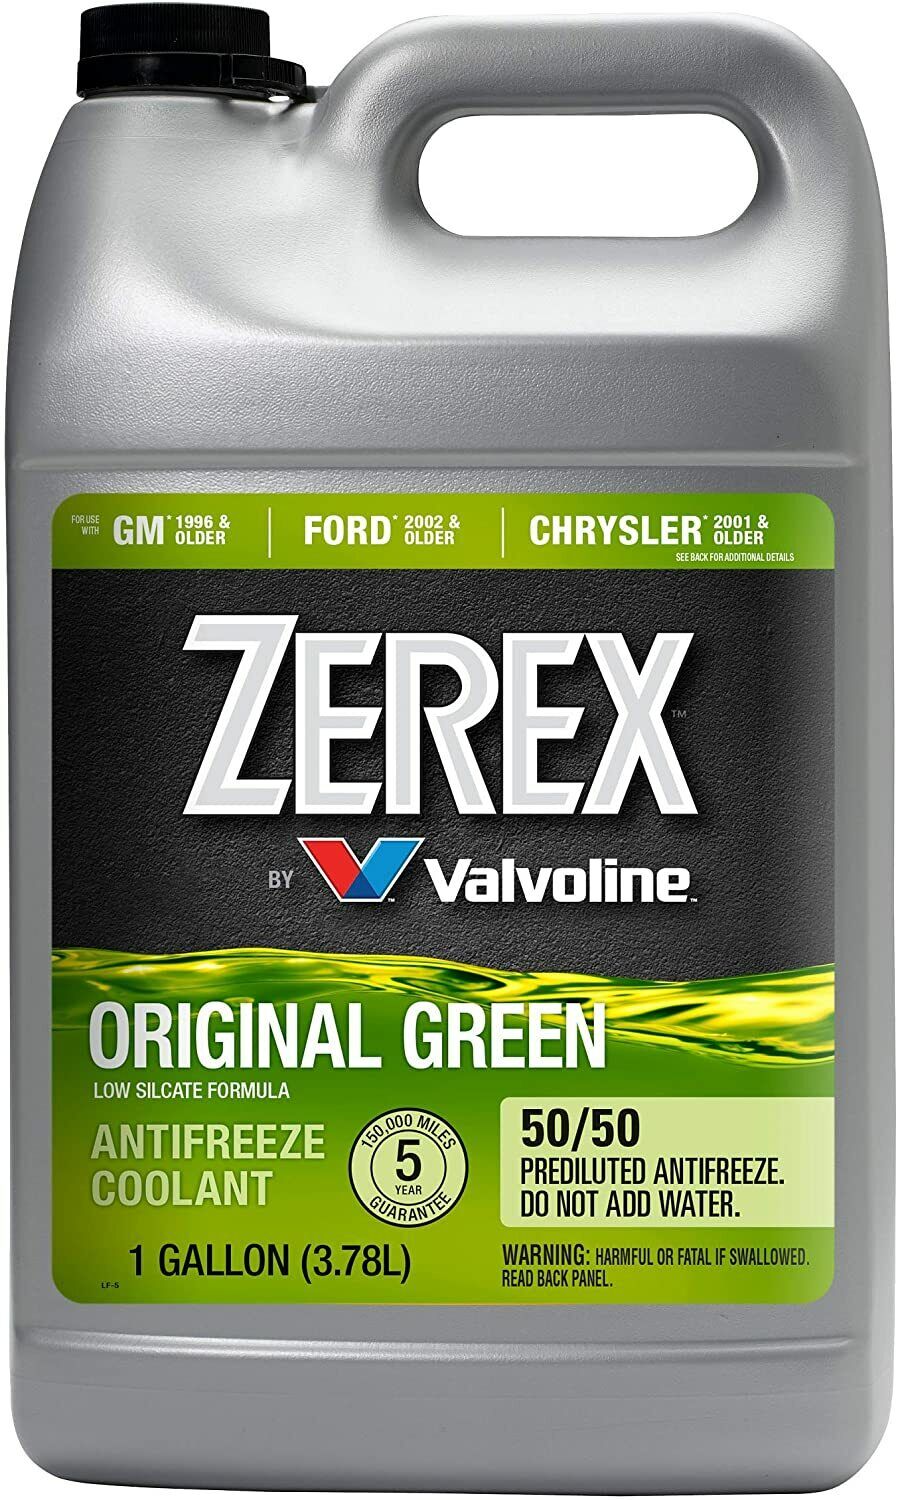 Zerex ZXRU1 Original Green 50/50 Prediluted Ready-to-Use Antifreeze/Coolant 1 GA